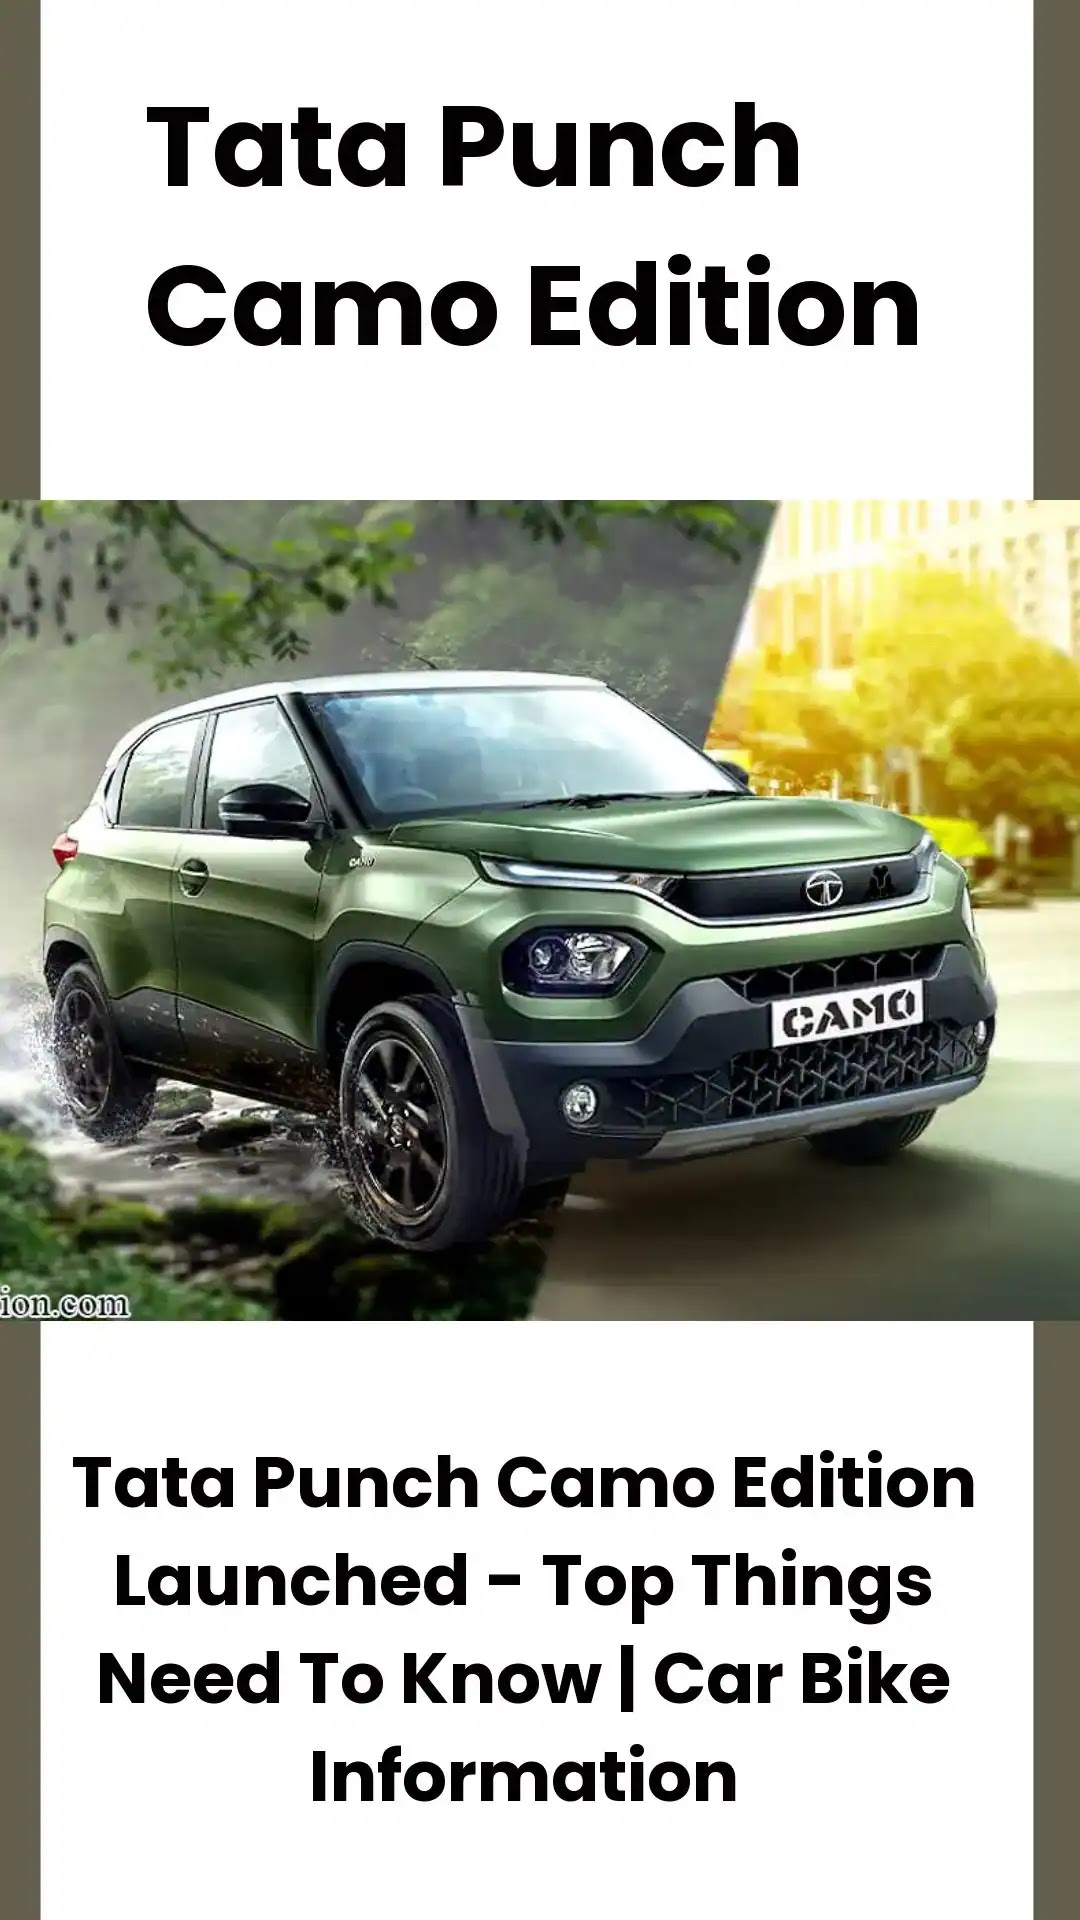 Tata Punch Camo Edition